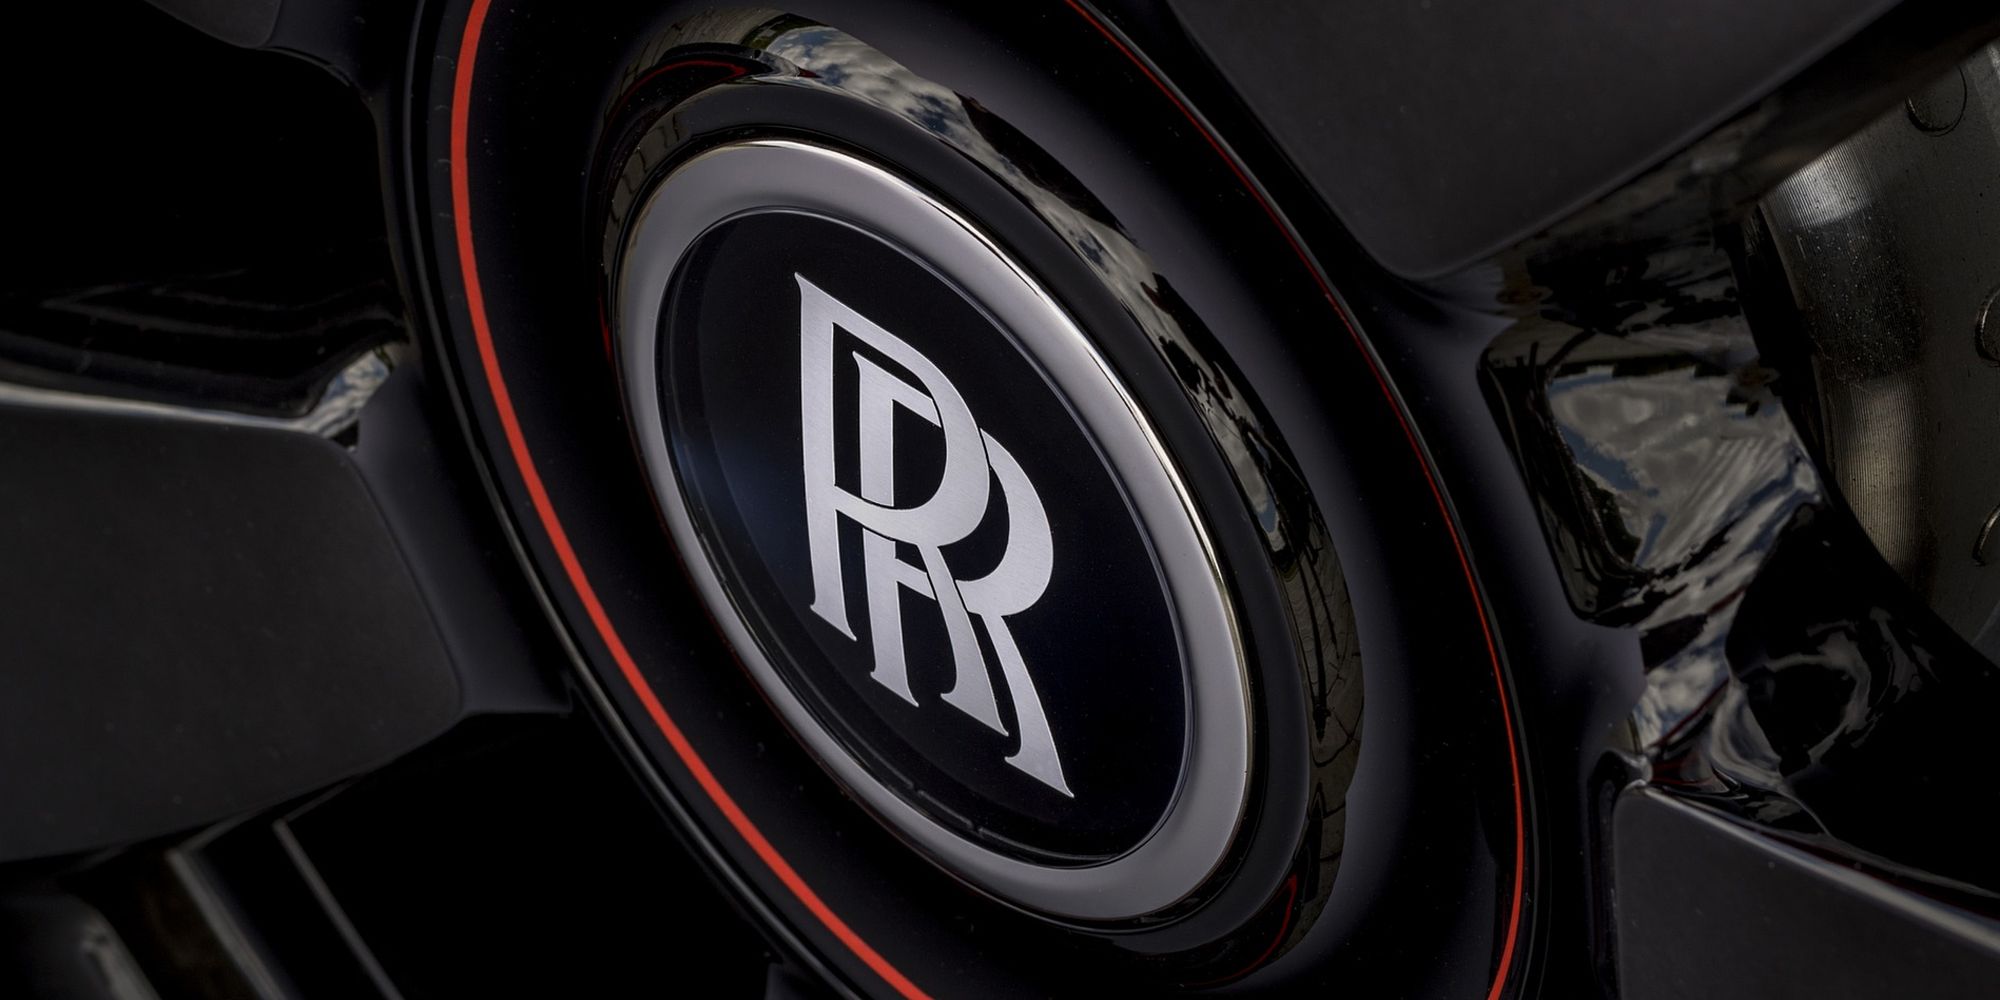 The Rolls Royce wheel caps on the Cullinan